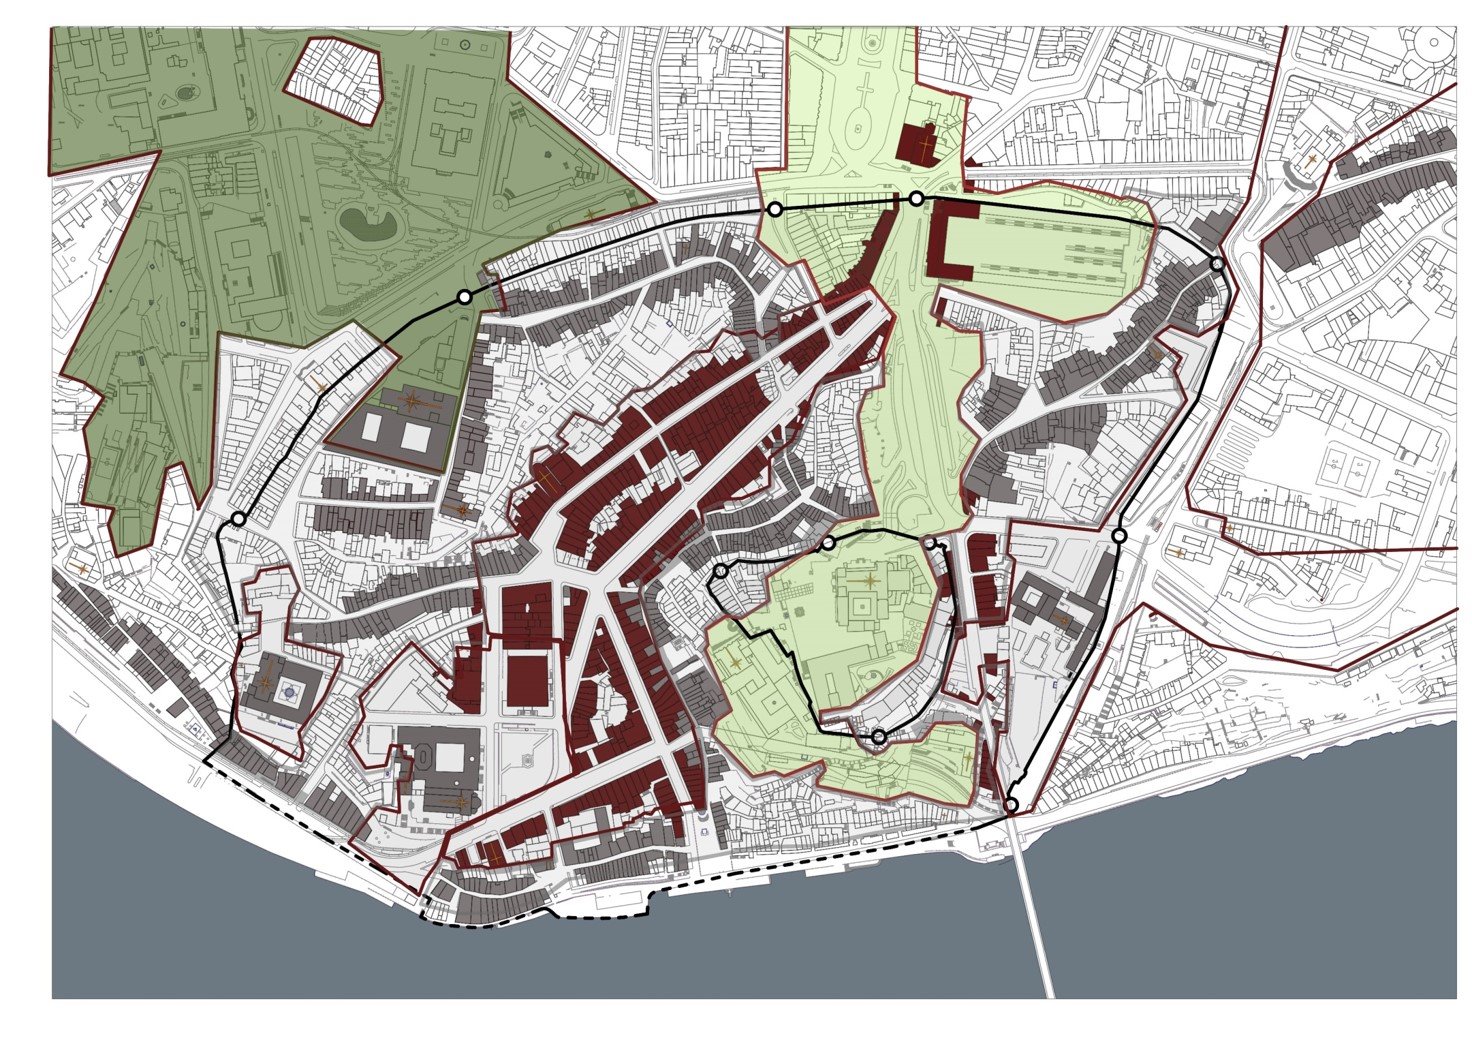 PNUM Workshop 2019 – Design the city based on the analysis of urban form